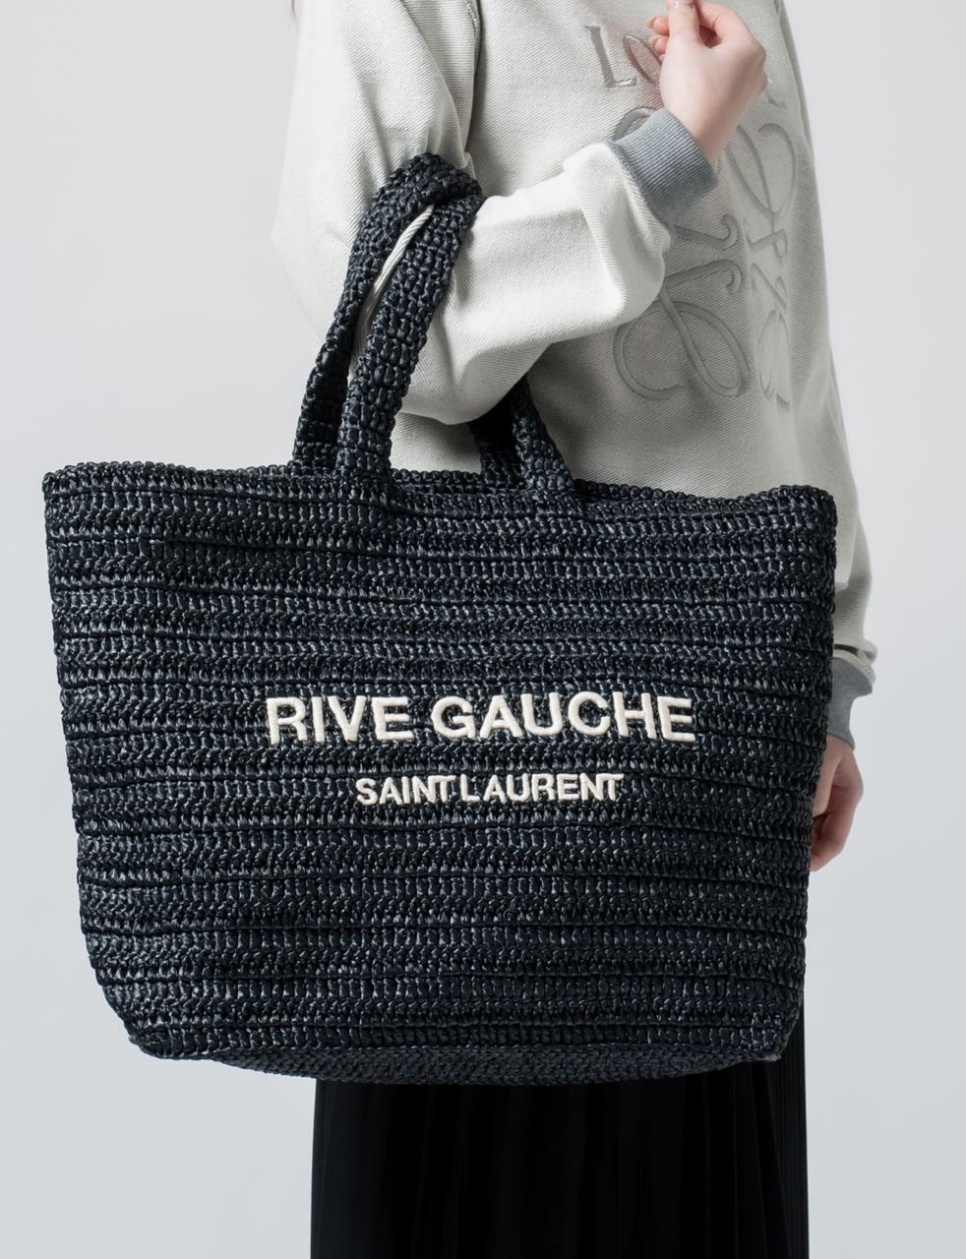 Saint Laurent Rive Gauche Supple Raffia Crochet Bag Black/Blanc